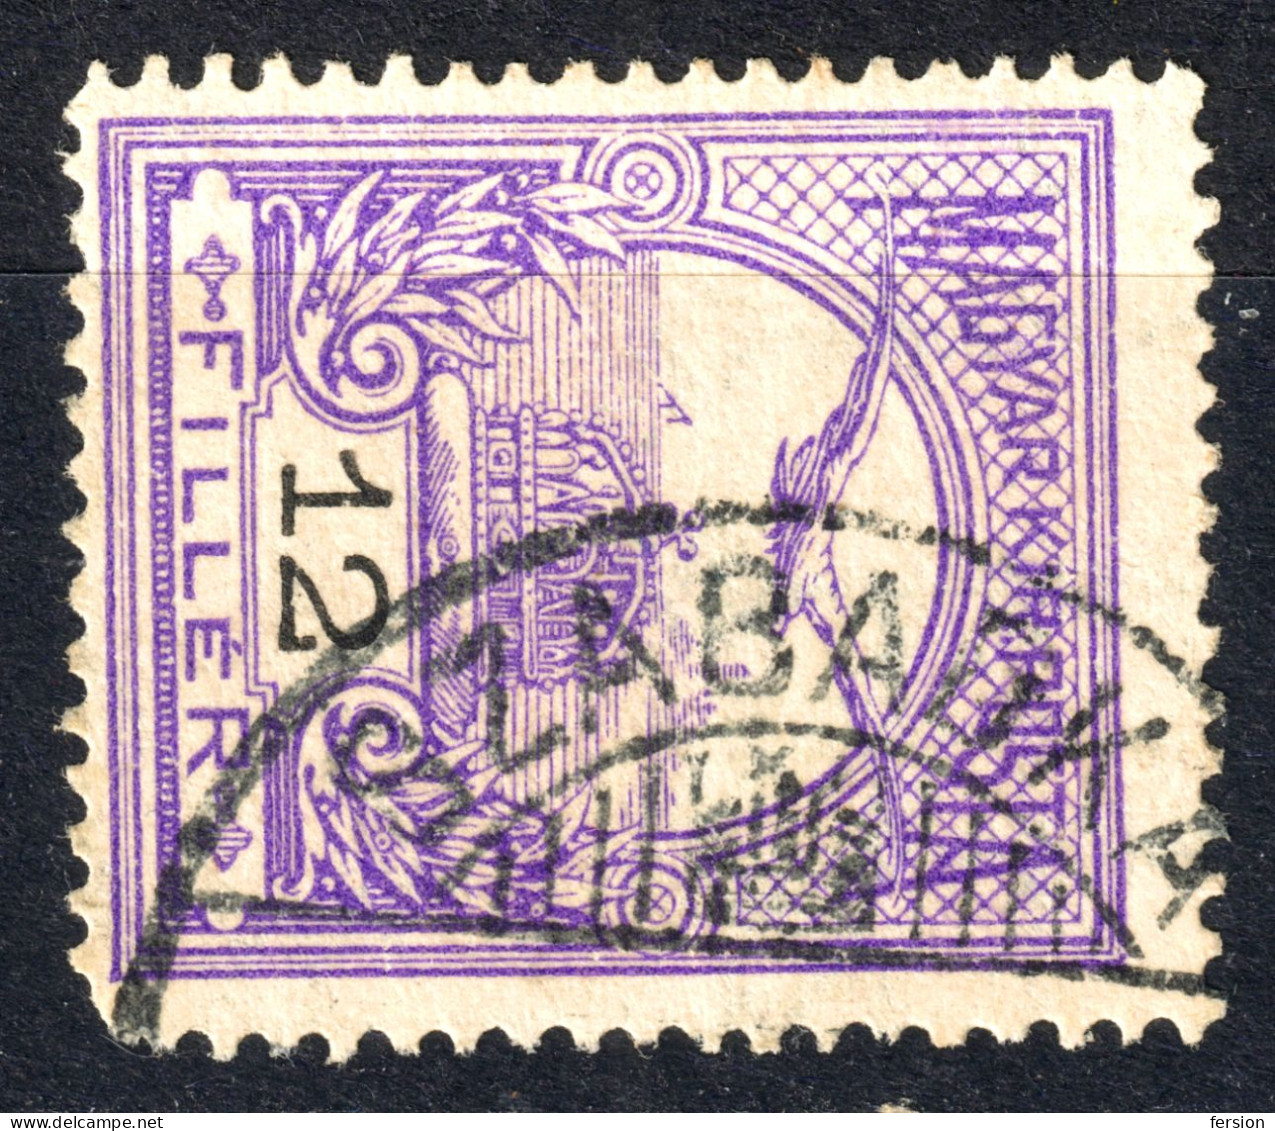 SZABADKA Subotica Postmark TURUL Crown 1910's Hungary SERBIA Vojvodina Bačka BÁCS BODROG County KuK - 12 Fill - Voorfilatelie